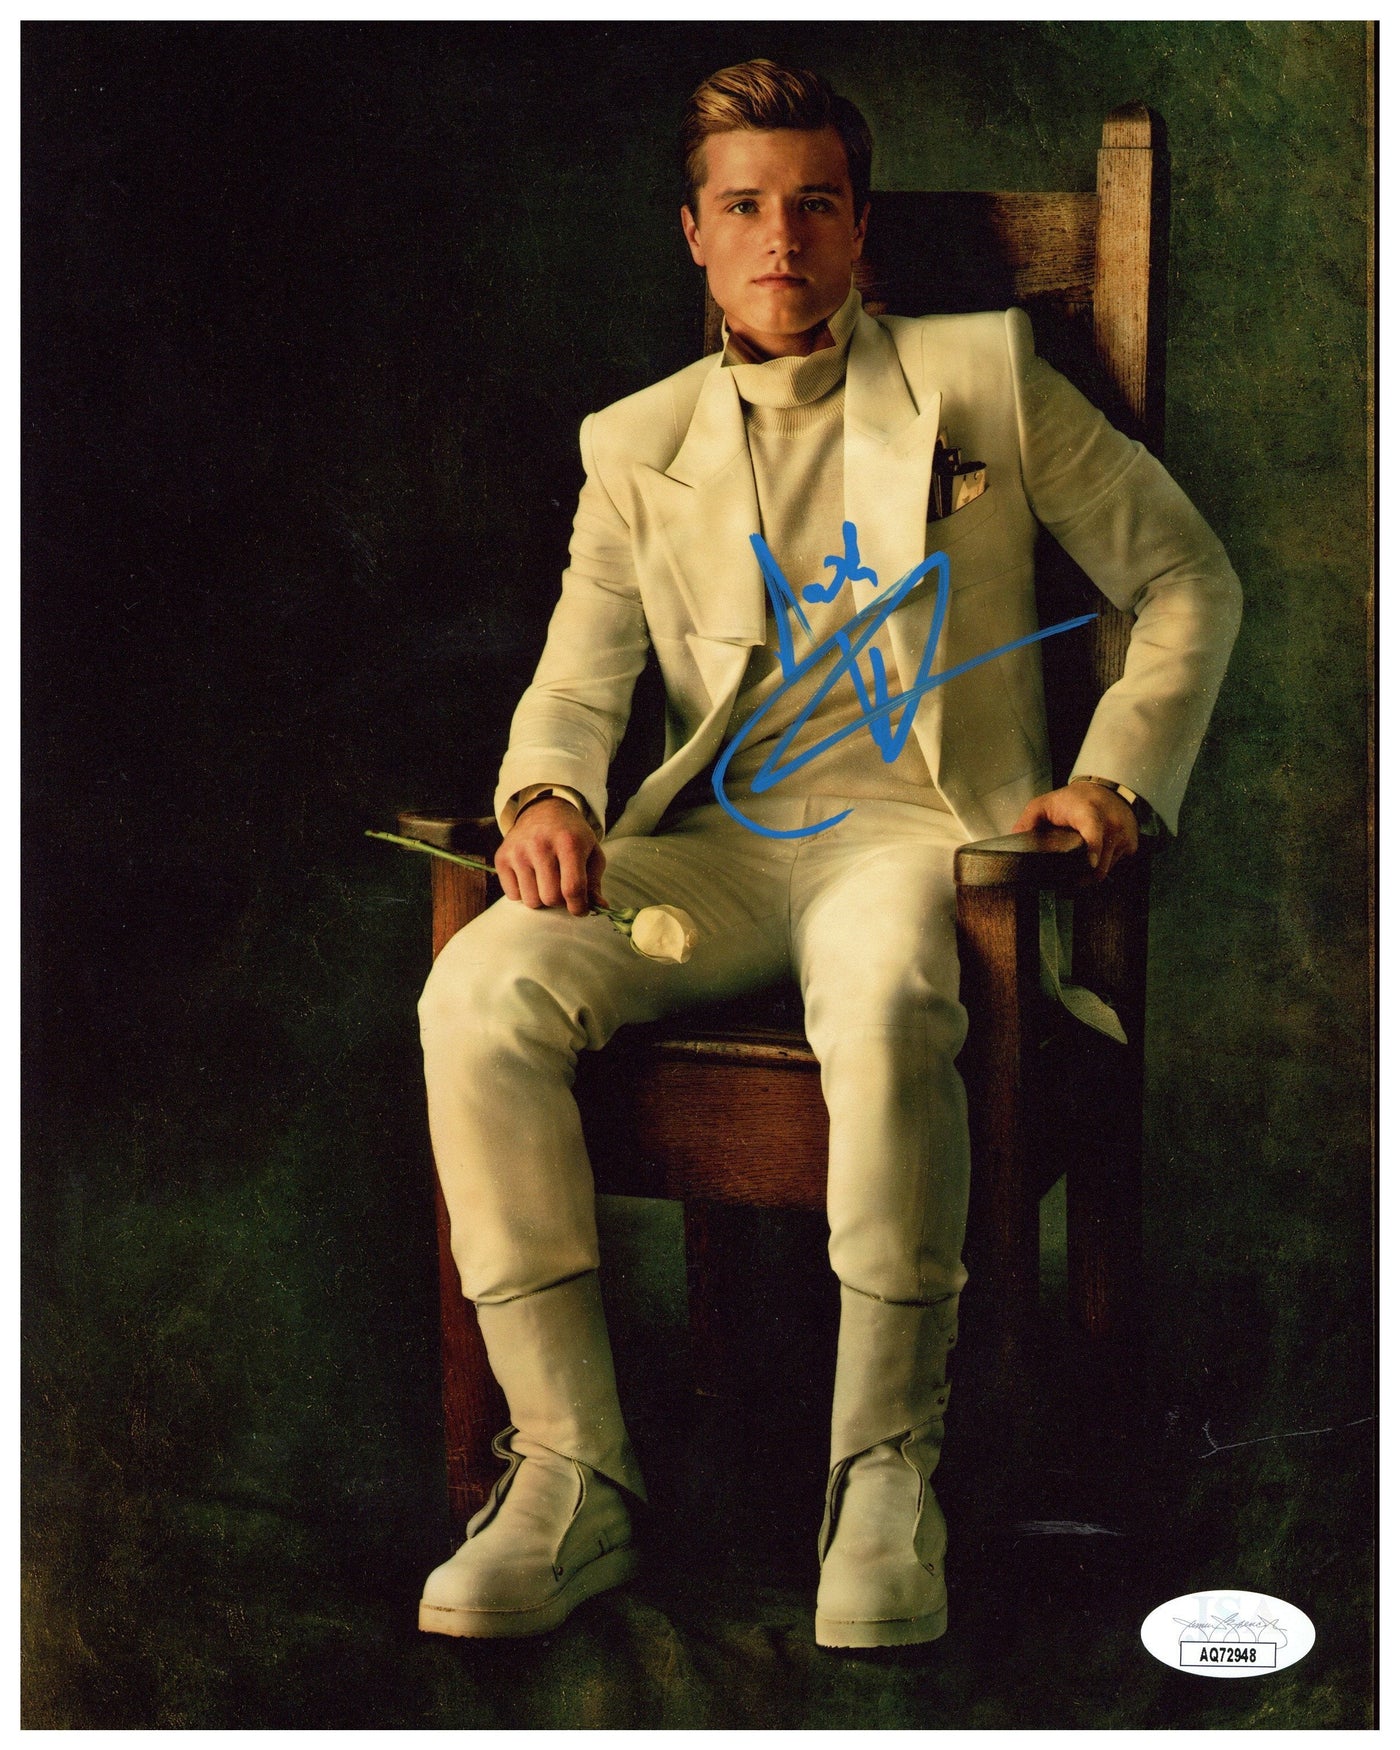 Josh Hutcherson Signed 8x10 Photo The Hunger Games Peeta Mellark Autographed JSA 5